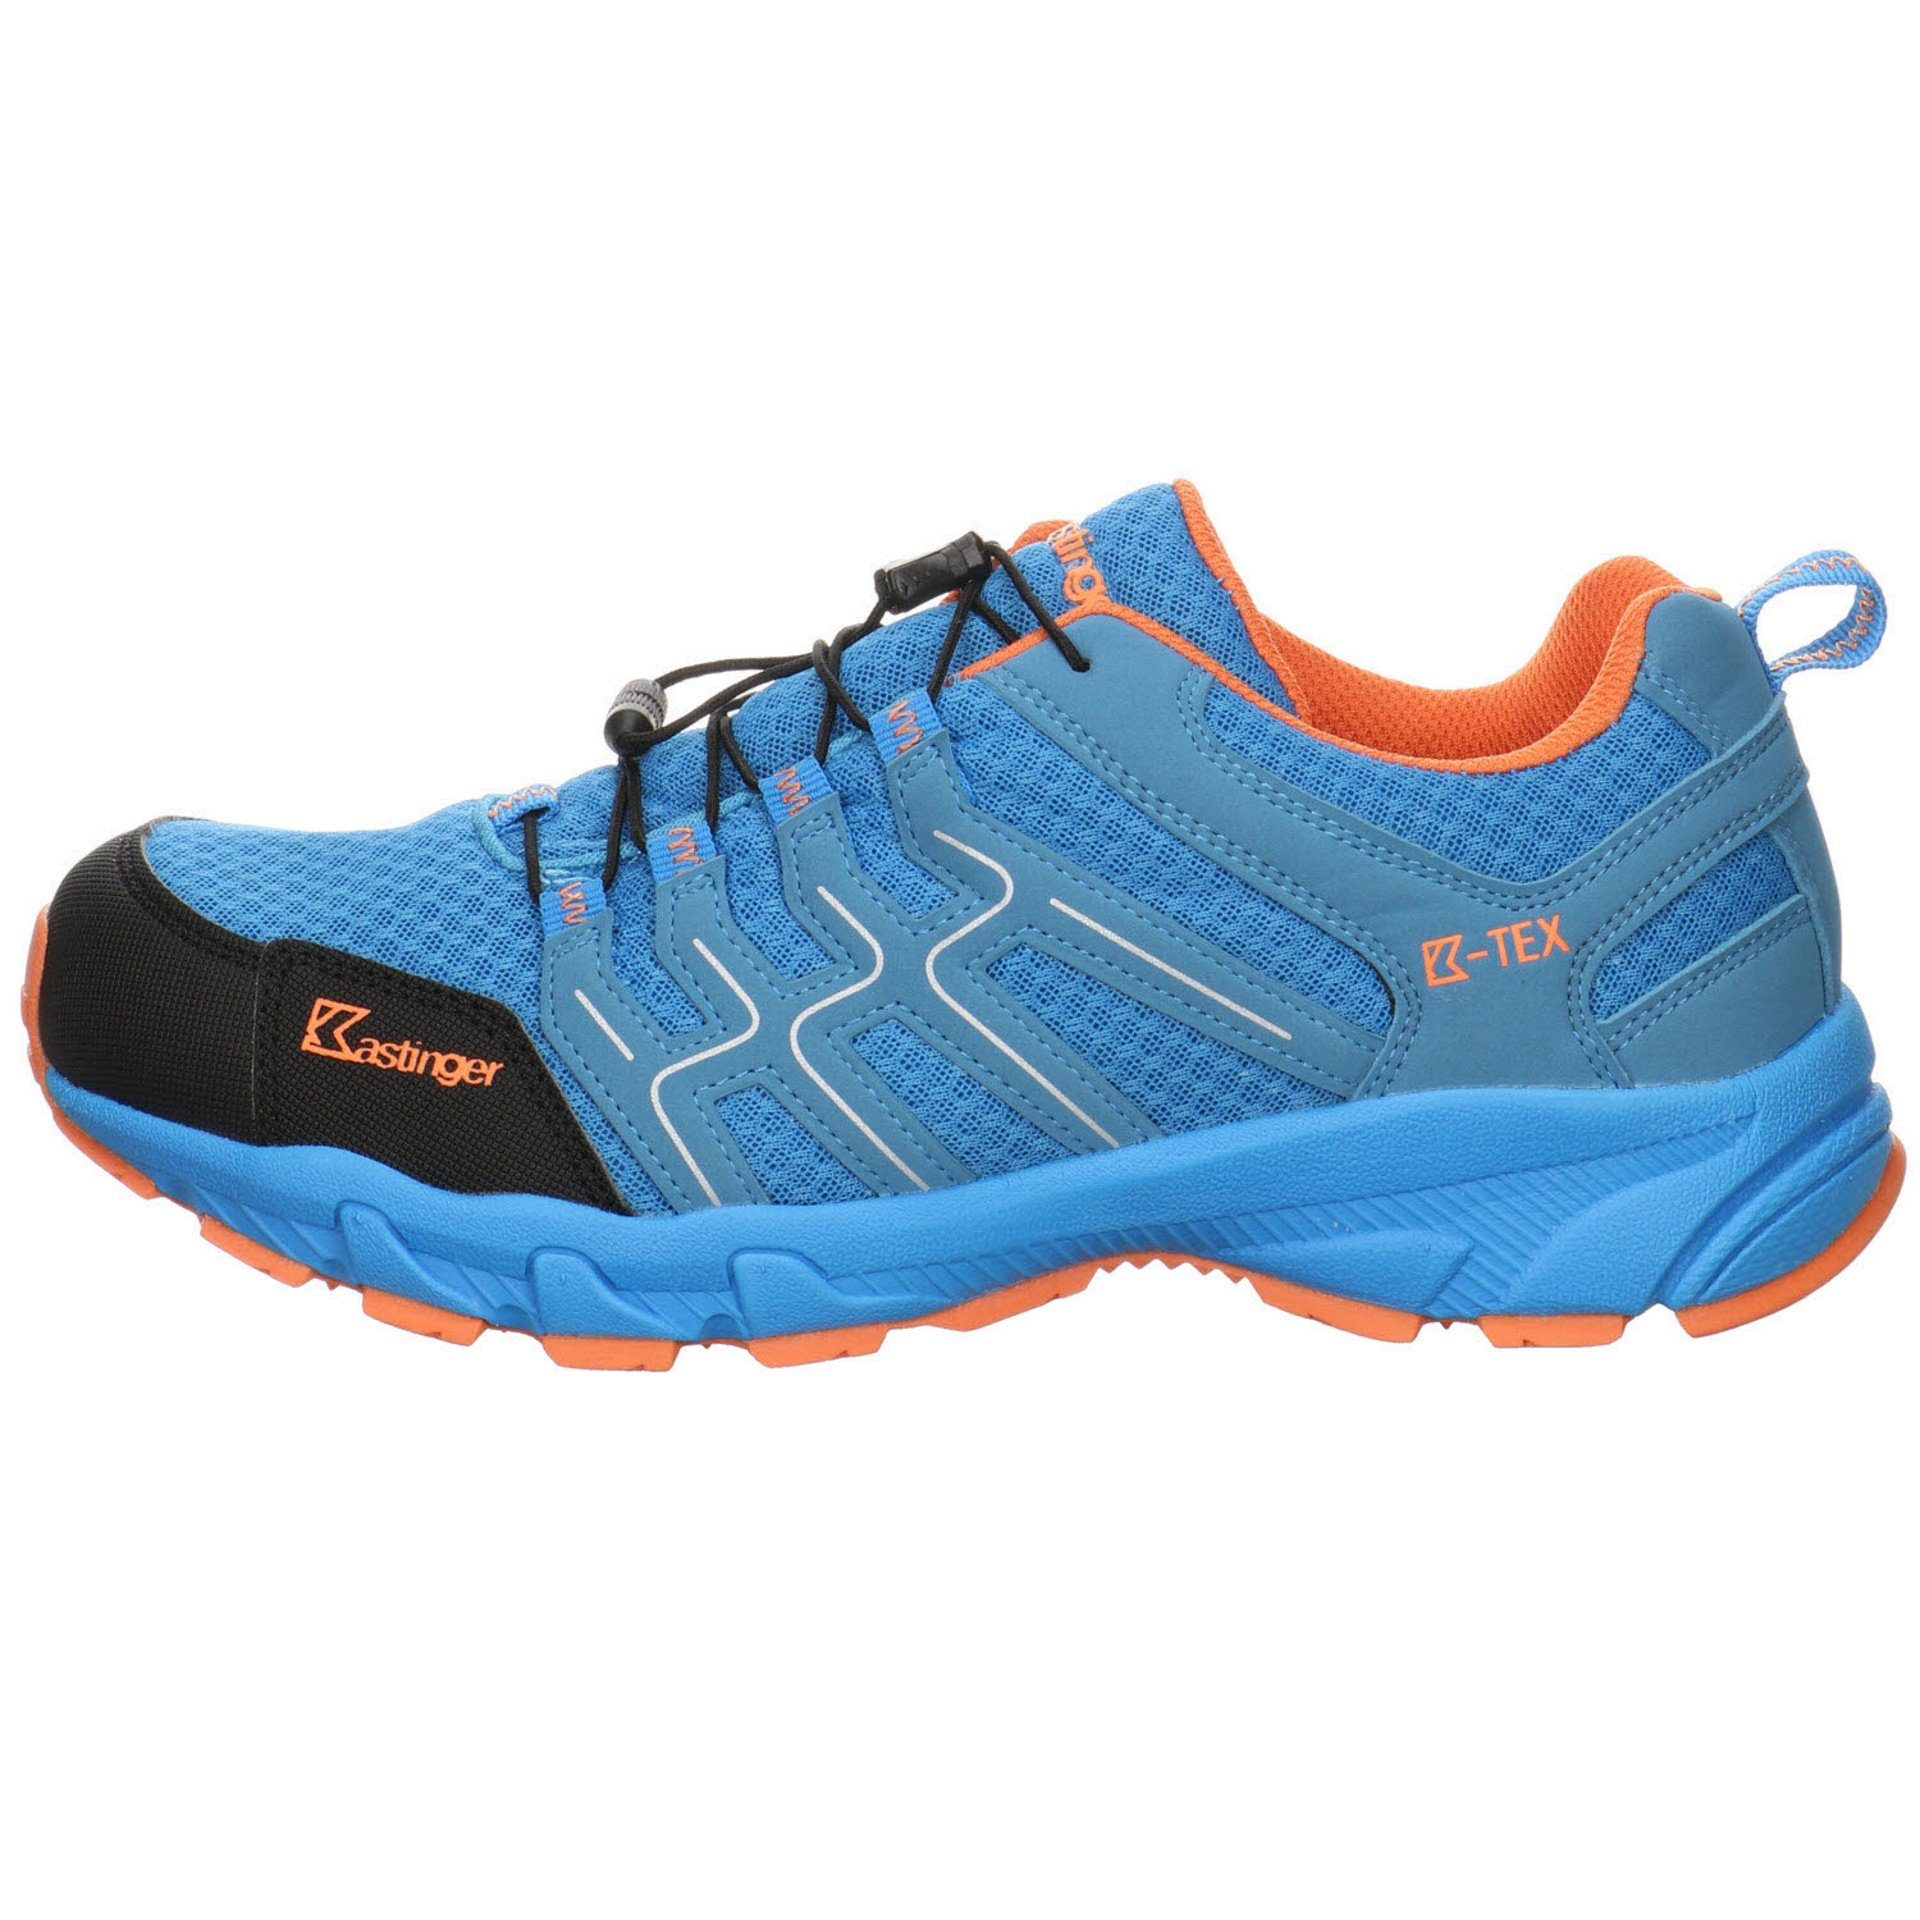 blue/orange Damen Synthetikkombination Kastinger Trailrunner Outdoorschuh Outdoorschuh Outdoor Schuhe